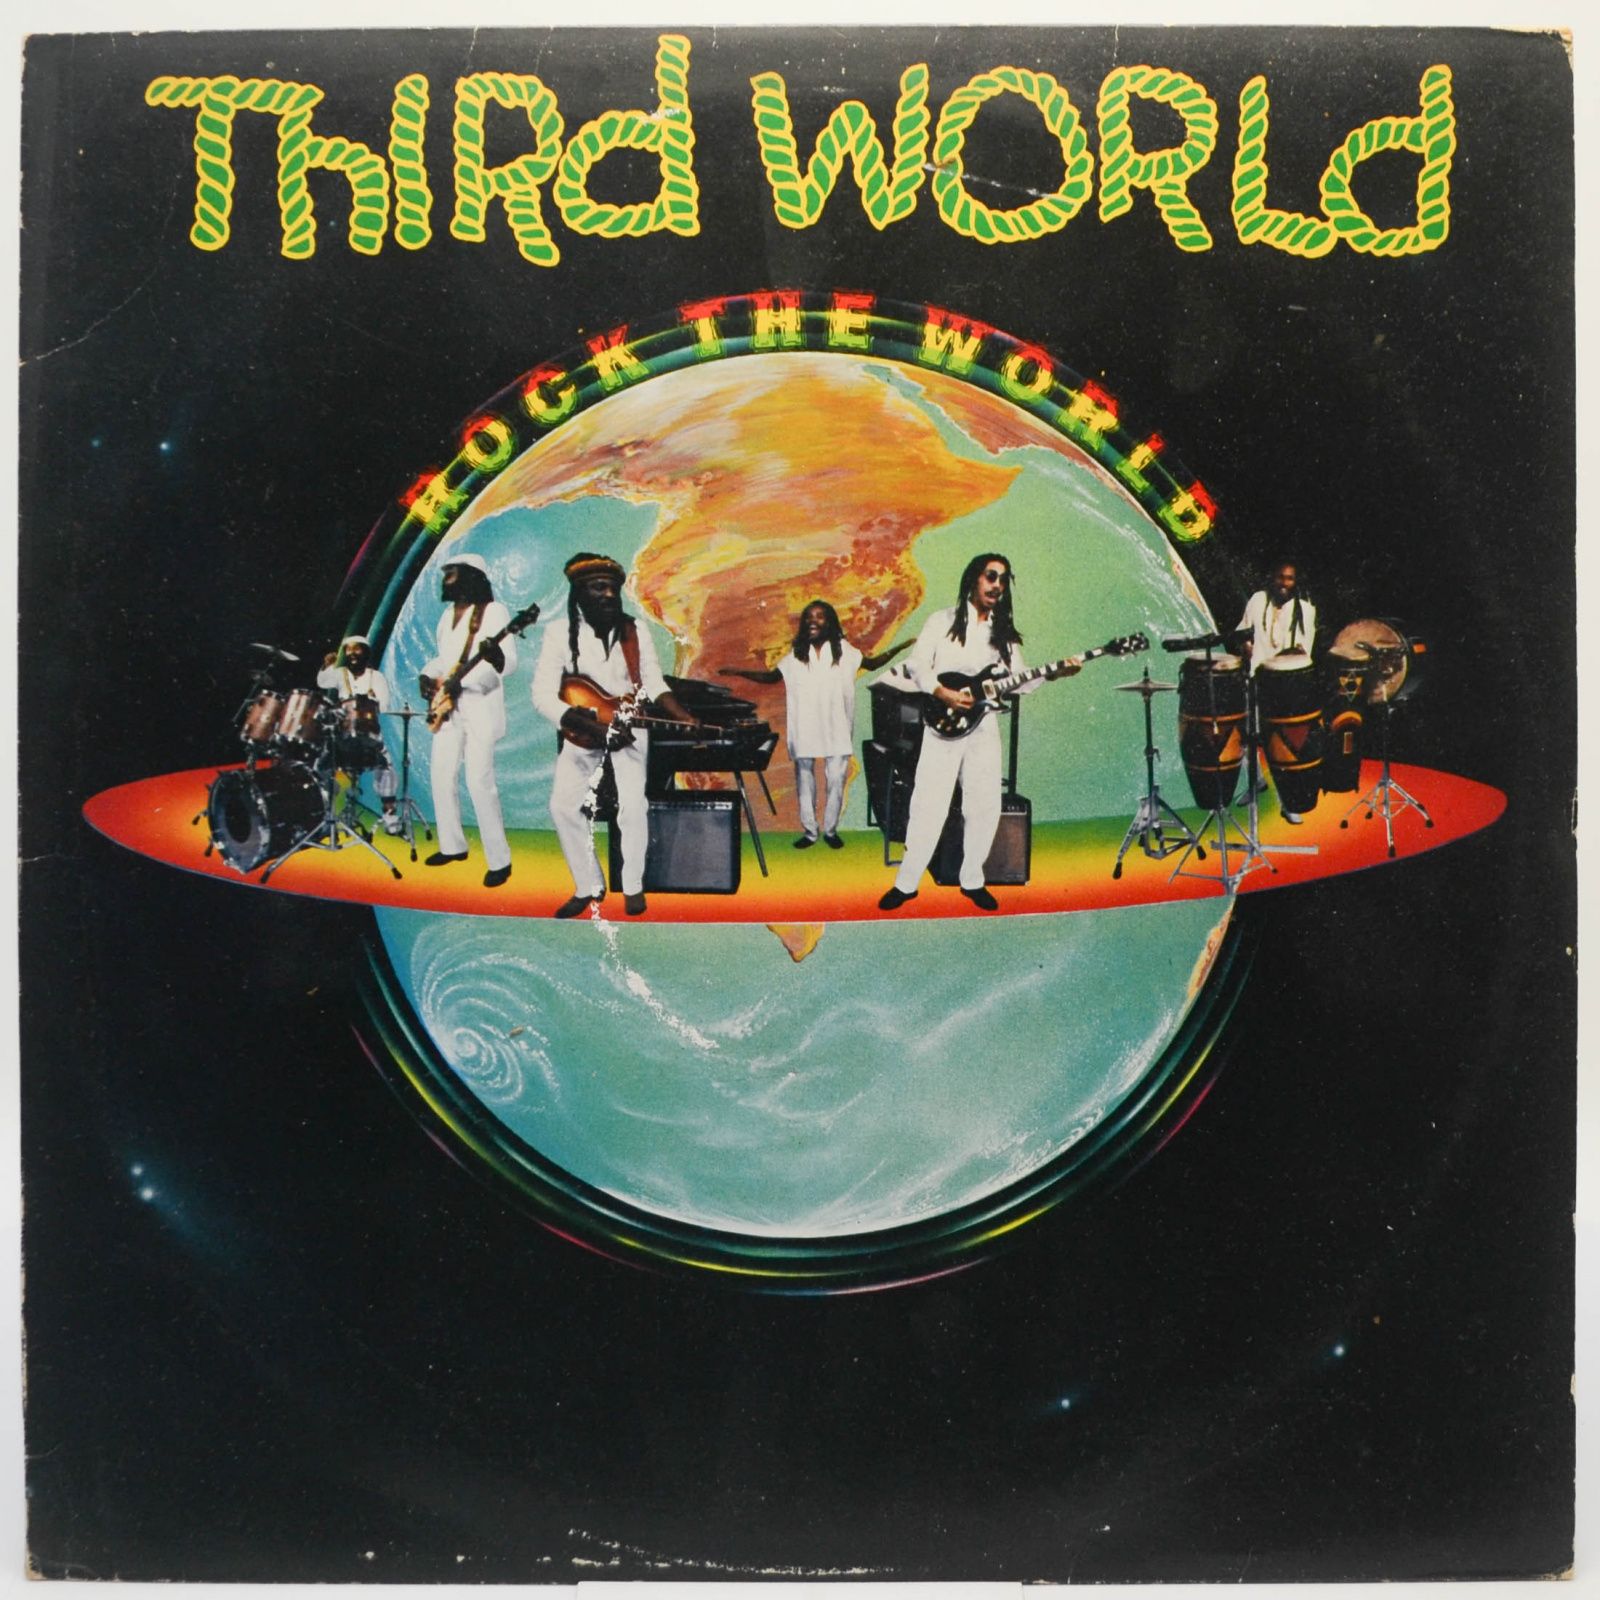 Third World — Rock The World, 1981